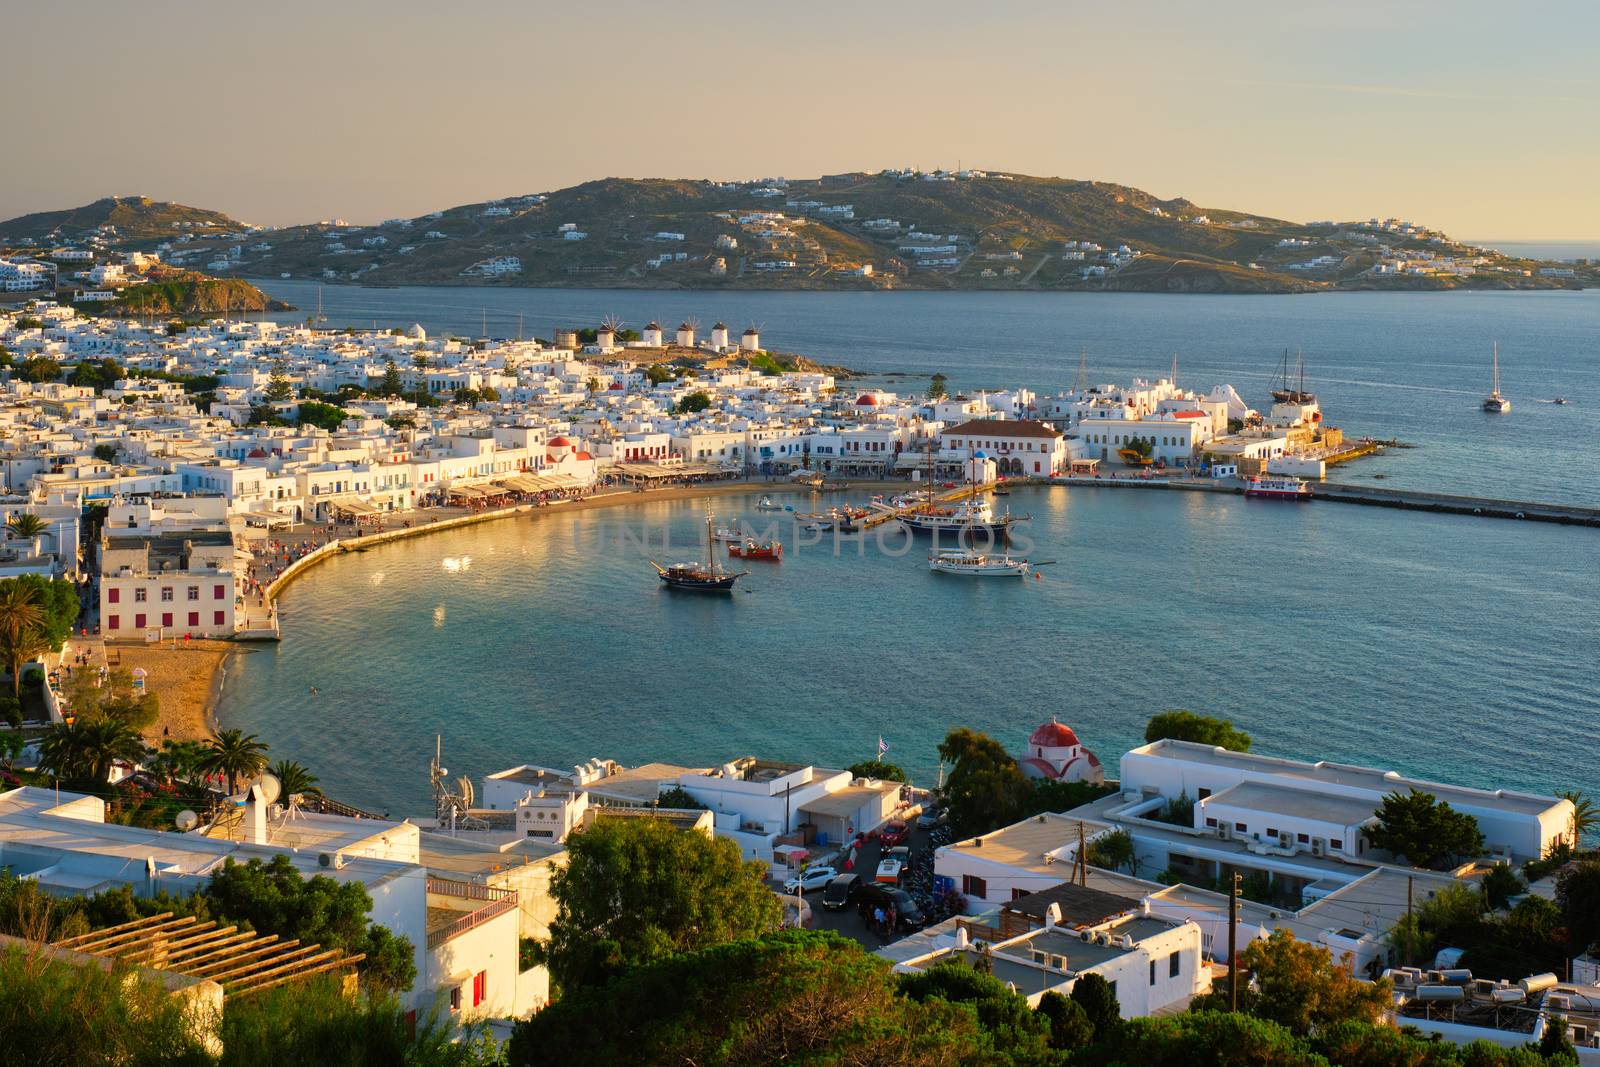 Mykonos island port with boats, Cyclades islands, Greece by dimol